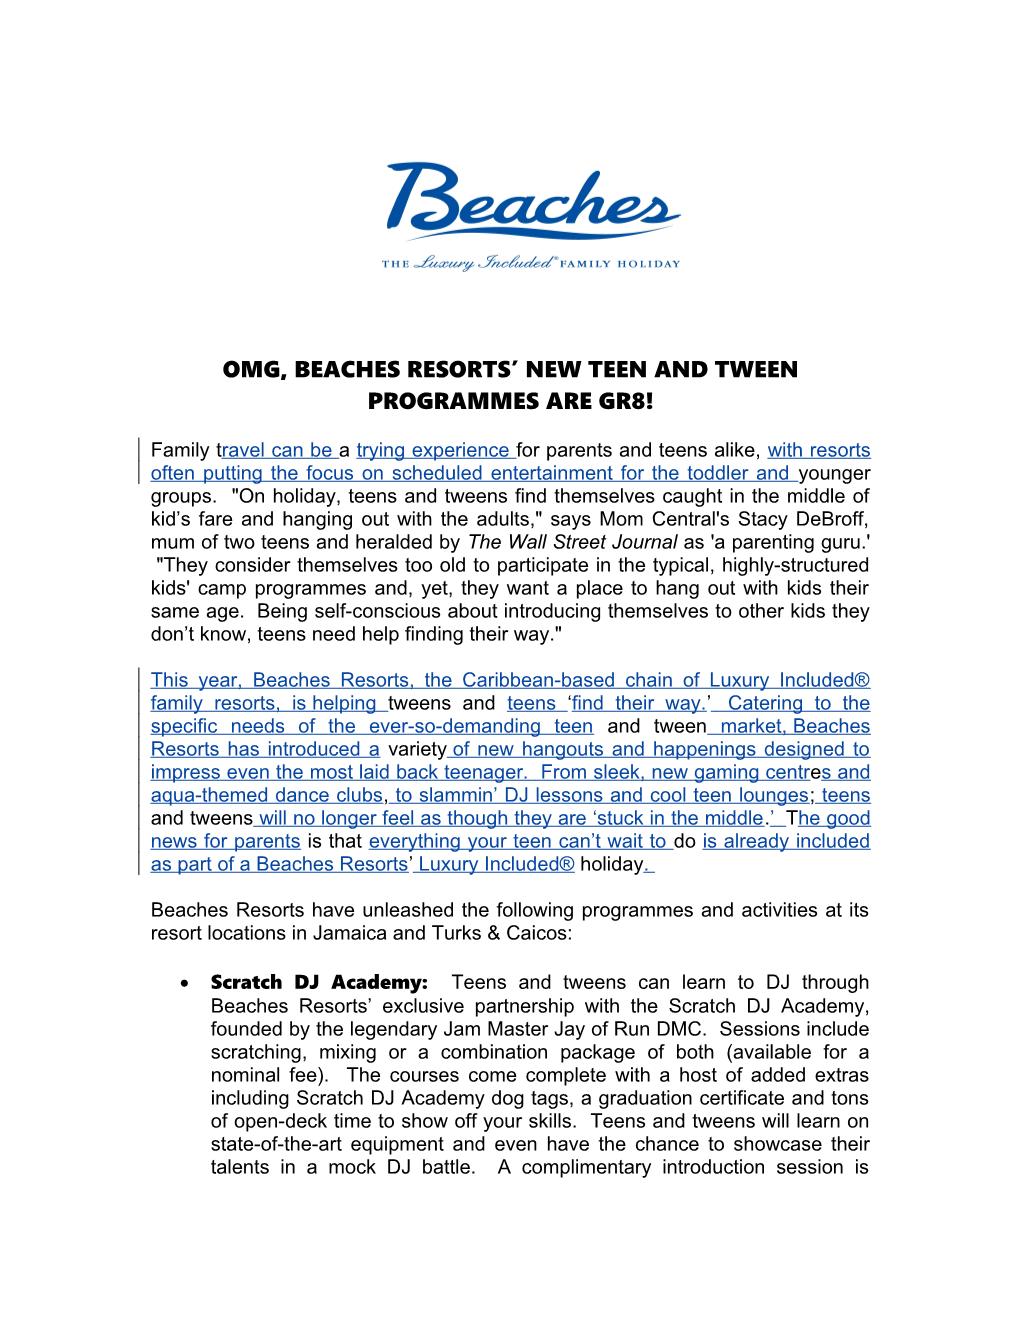 Families Will Enjoy a Wonderfall Vacation at Beaches Resorts